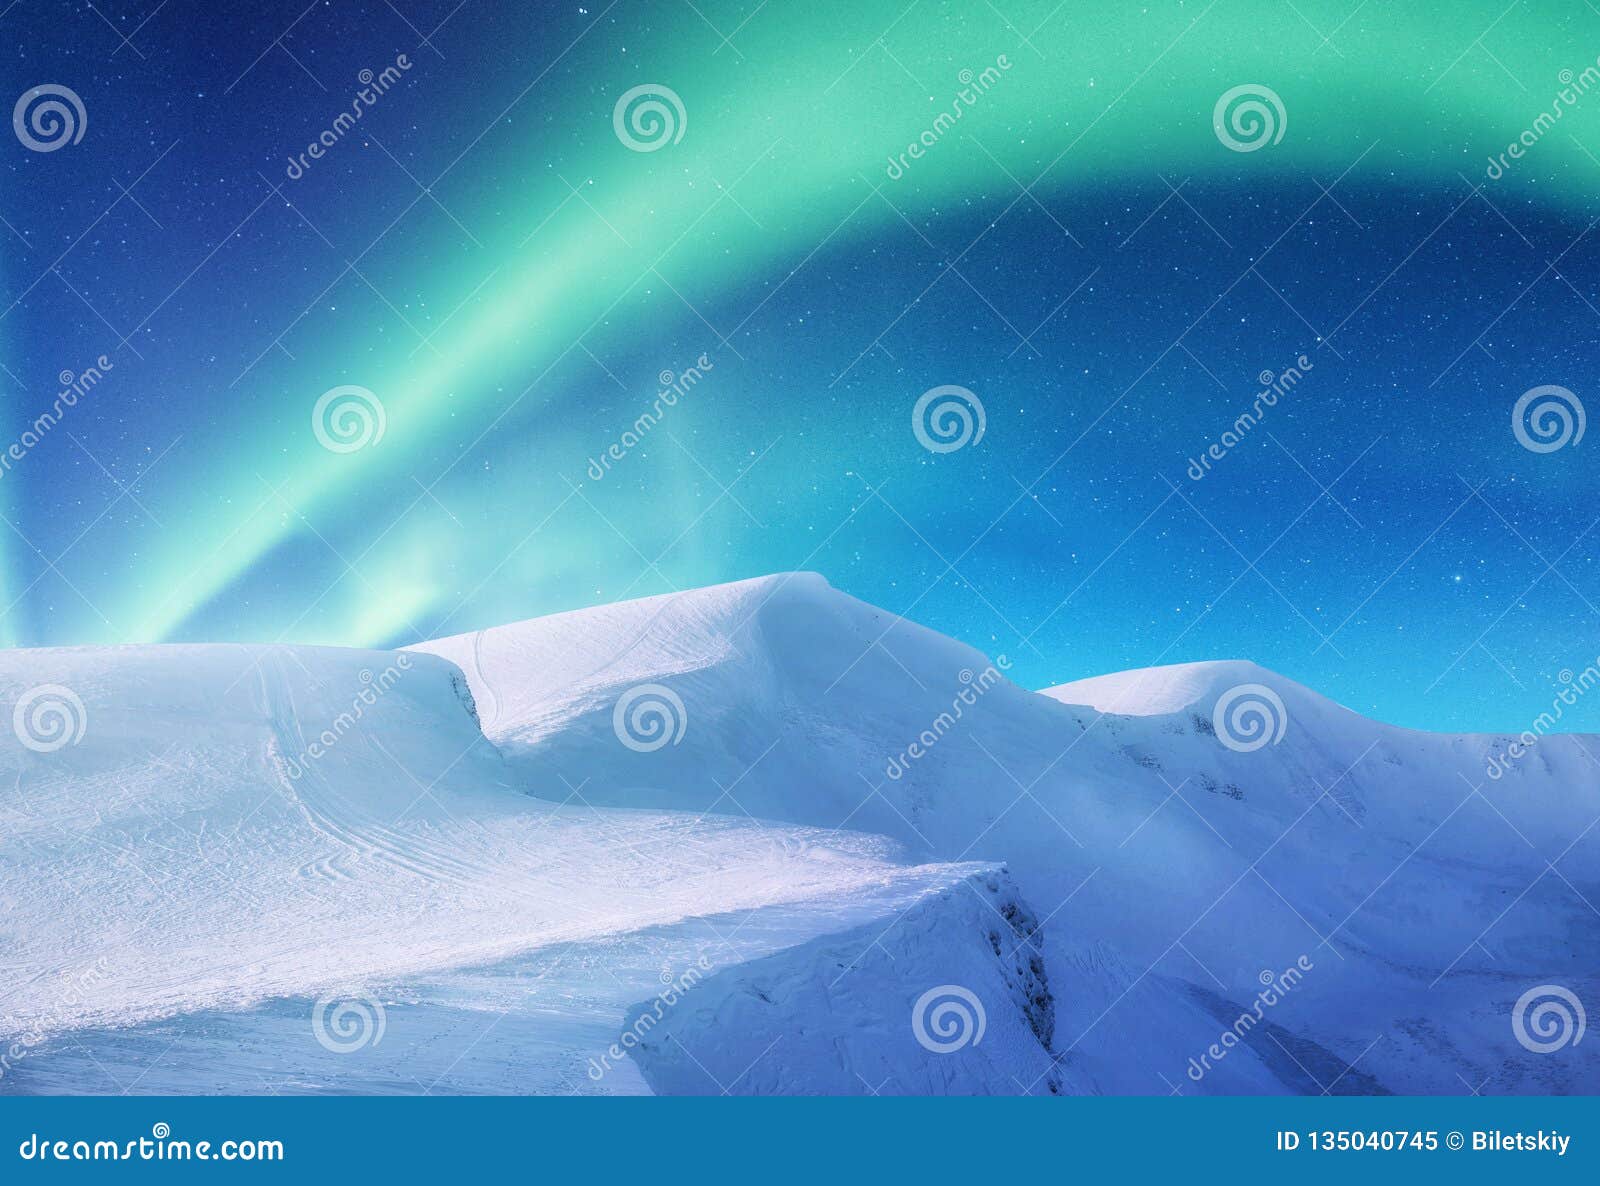 aurora borealis on the lofoten islands, norway. green northern lights above mountains. night sky with polar lights.